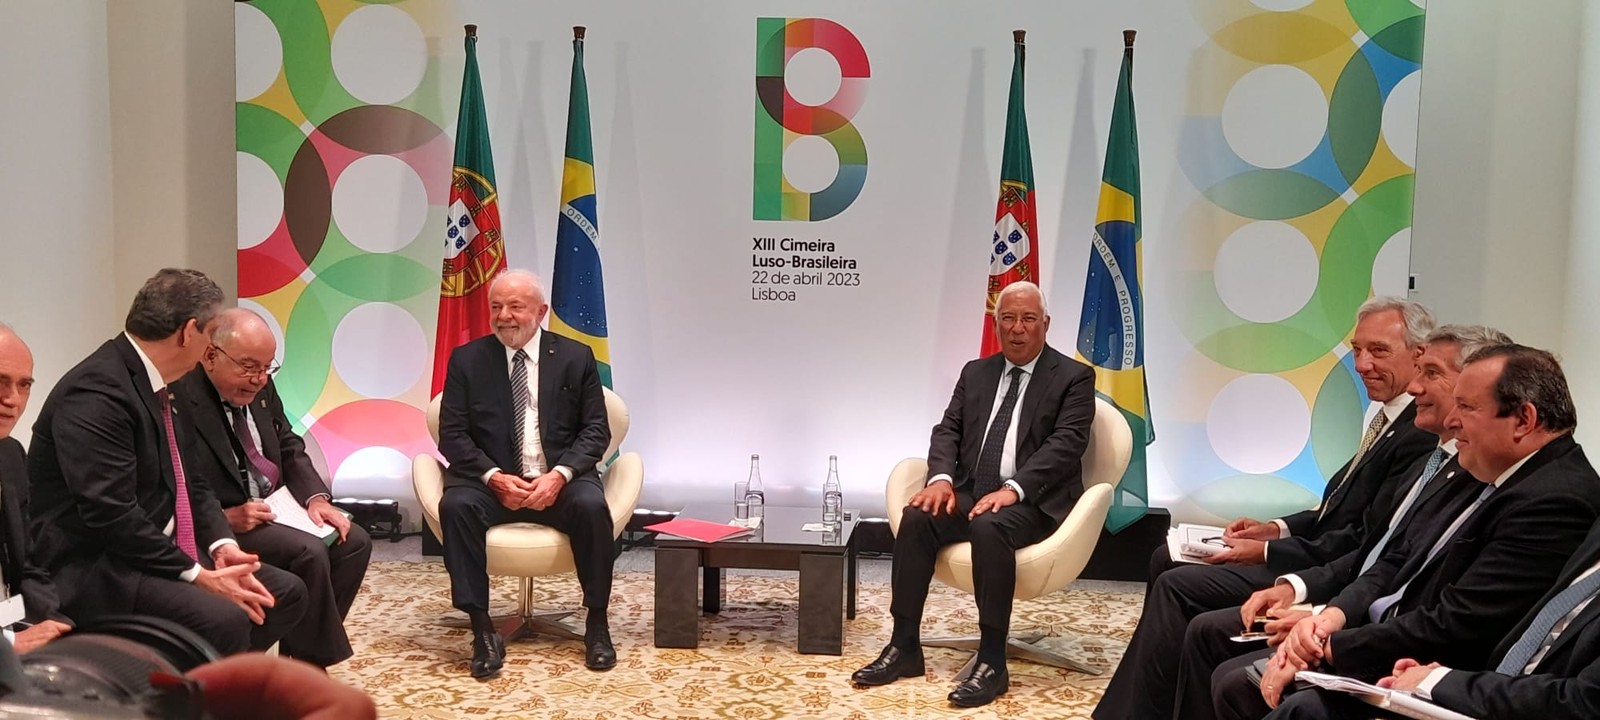 Presidente Lula participa da XIII Cimeira Luso-Brasileira, em Lisboa  — Foto: Gian Amato